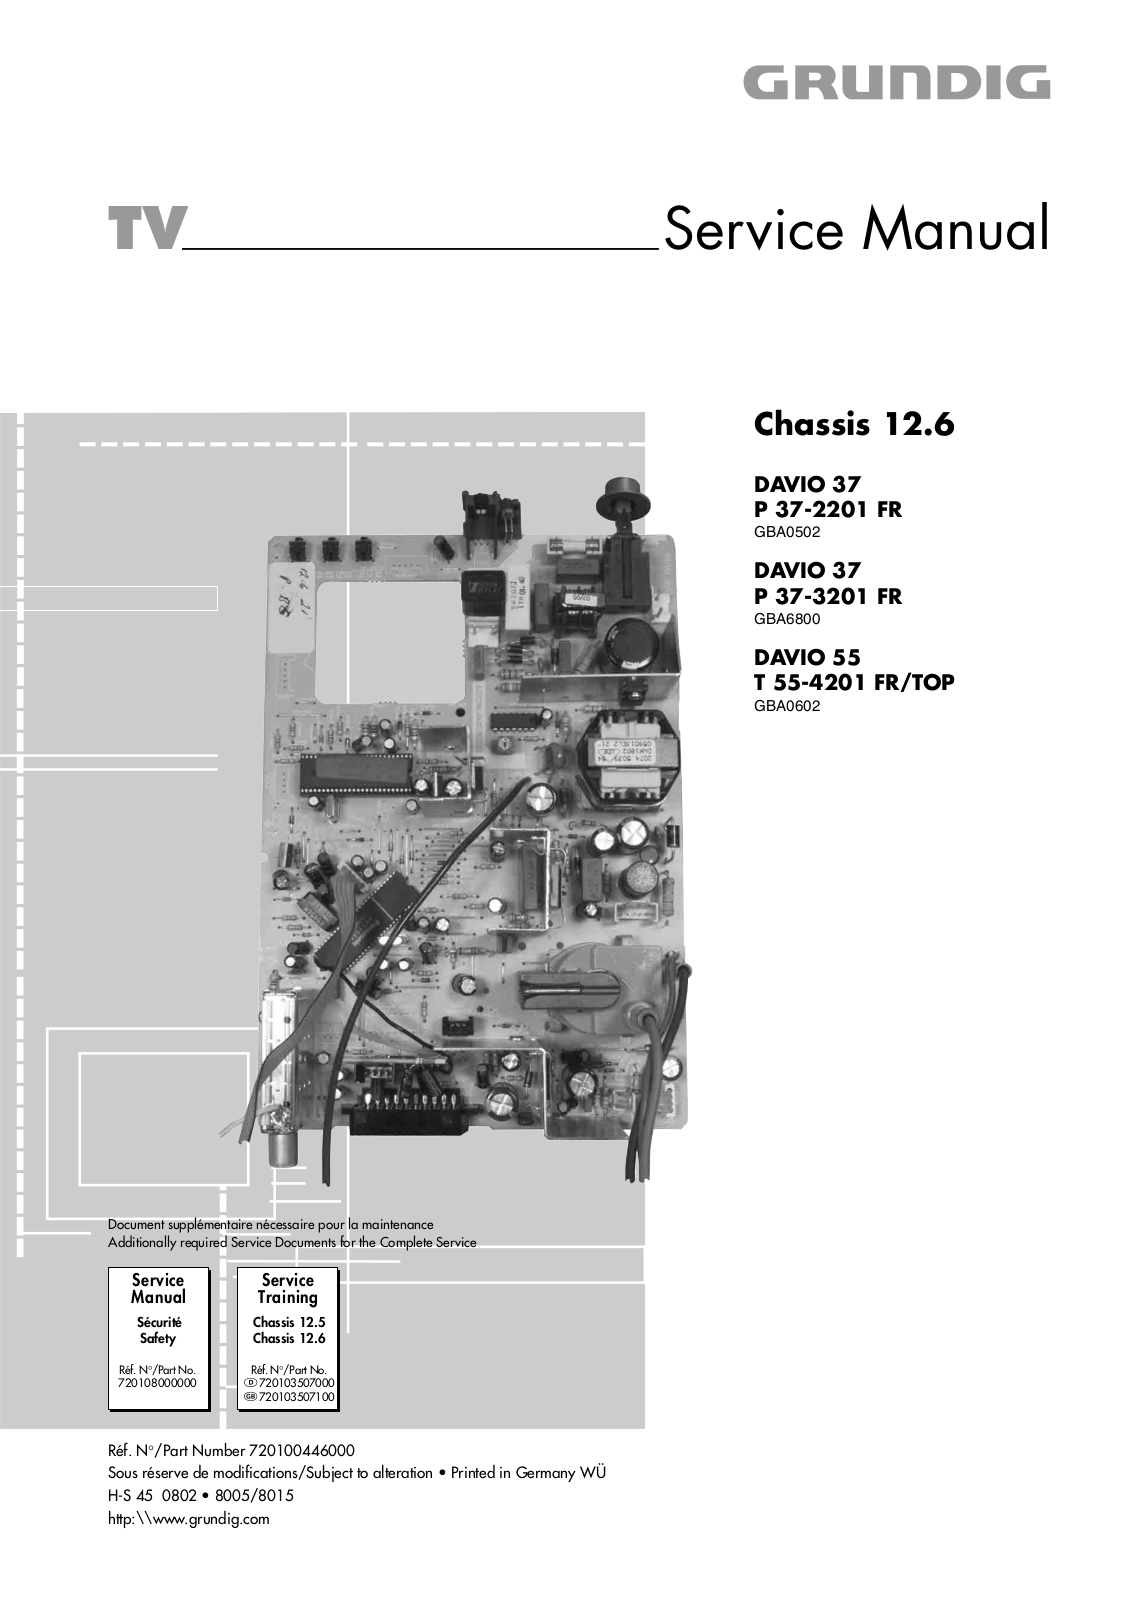 Grundig DAVIO 37 P 37-2201 FR, DAVIO 37 P 37-3201 FR Service Manual